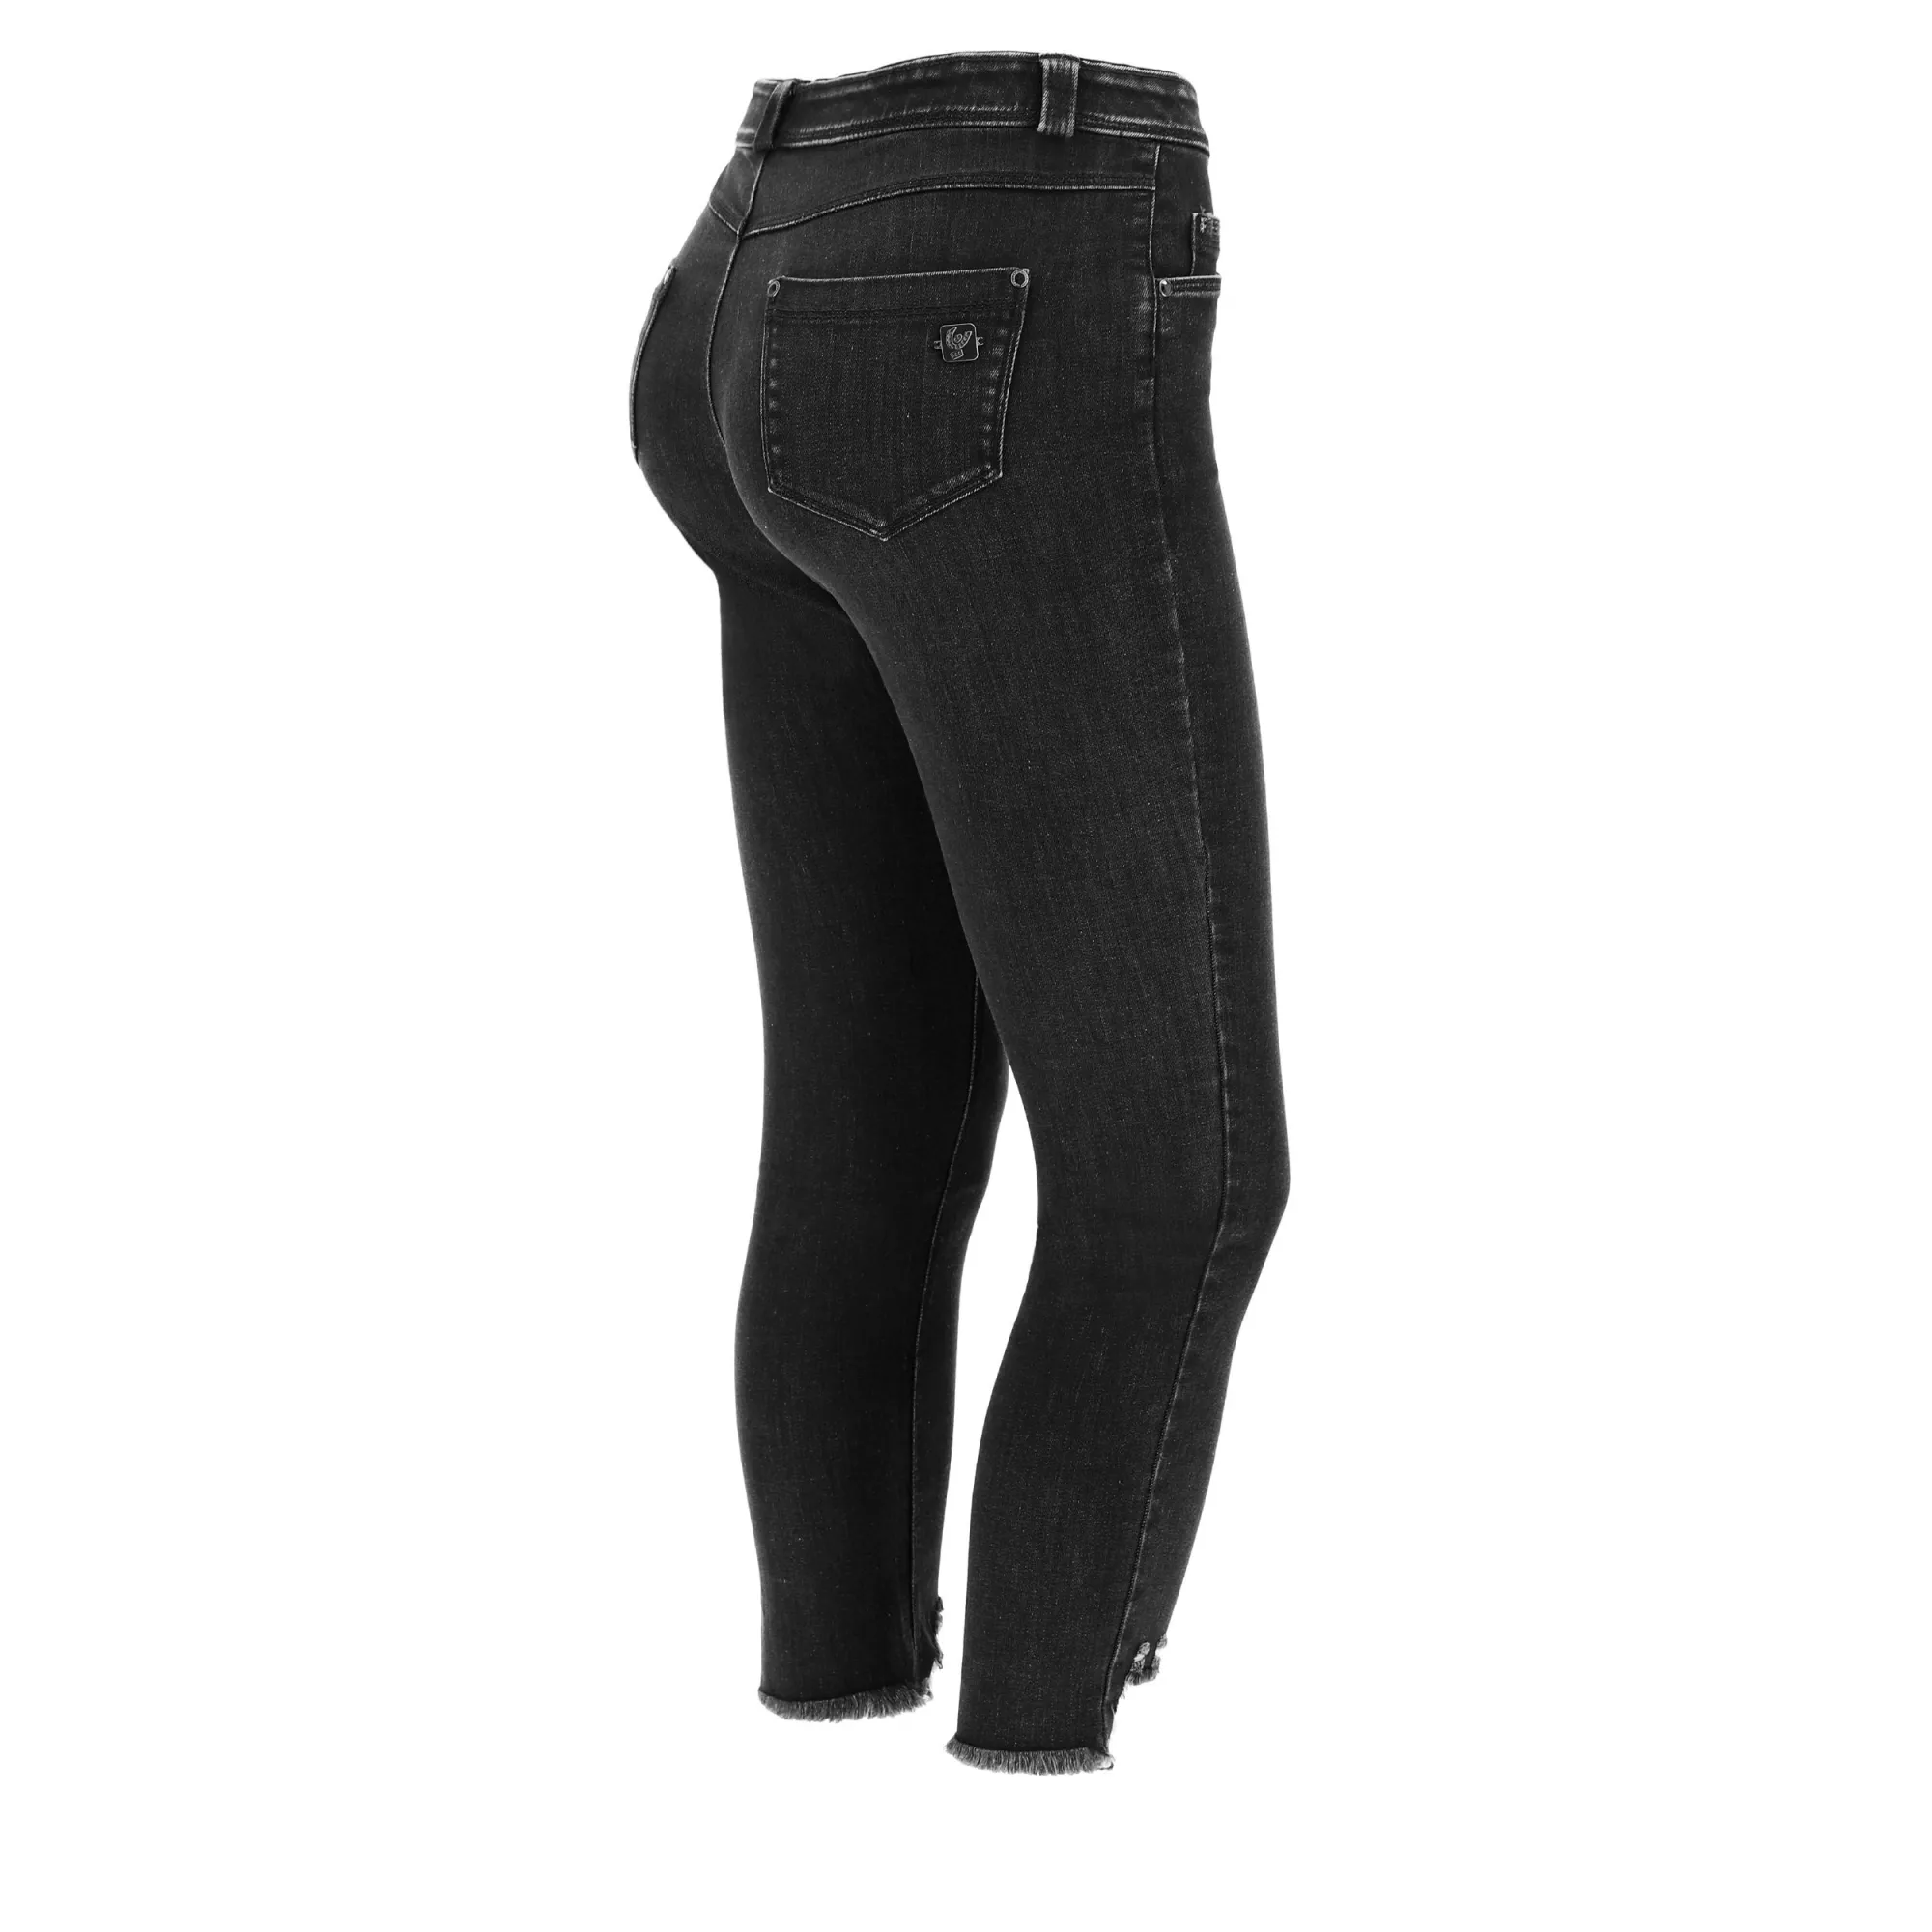 Freddy Fit Jeans - 7/8 Regular Waist Skinny - Destroyed - Black Denim – Black Seam - J7N